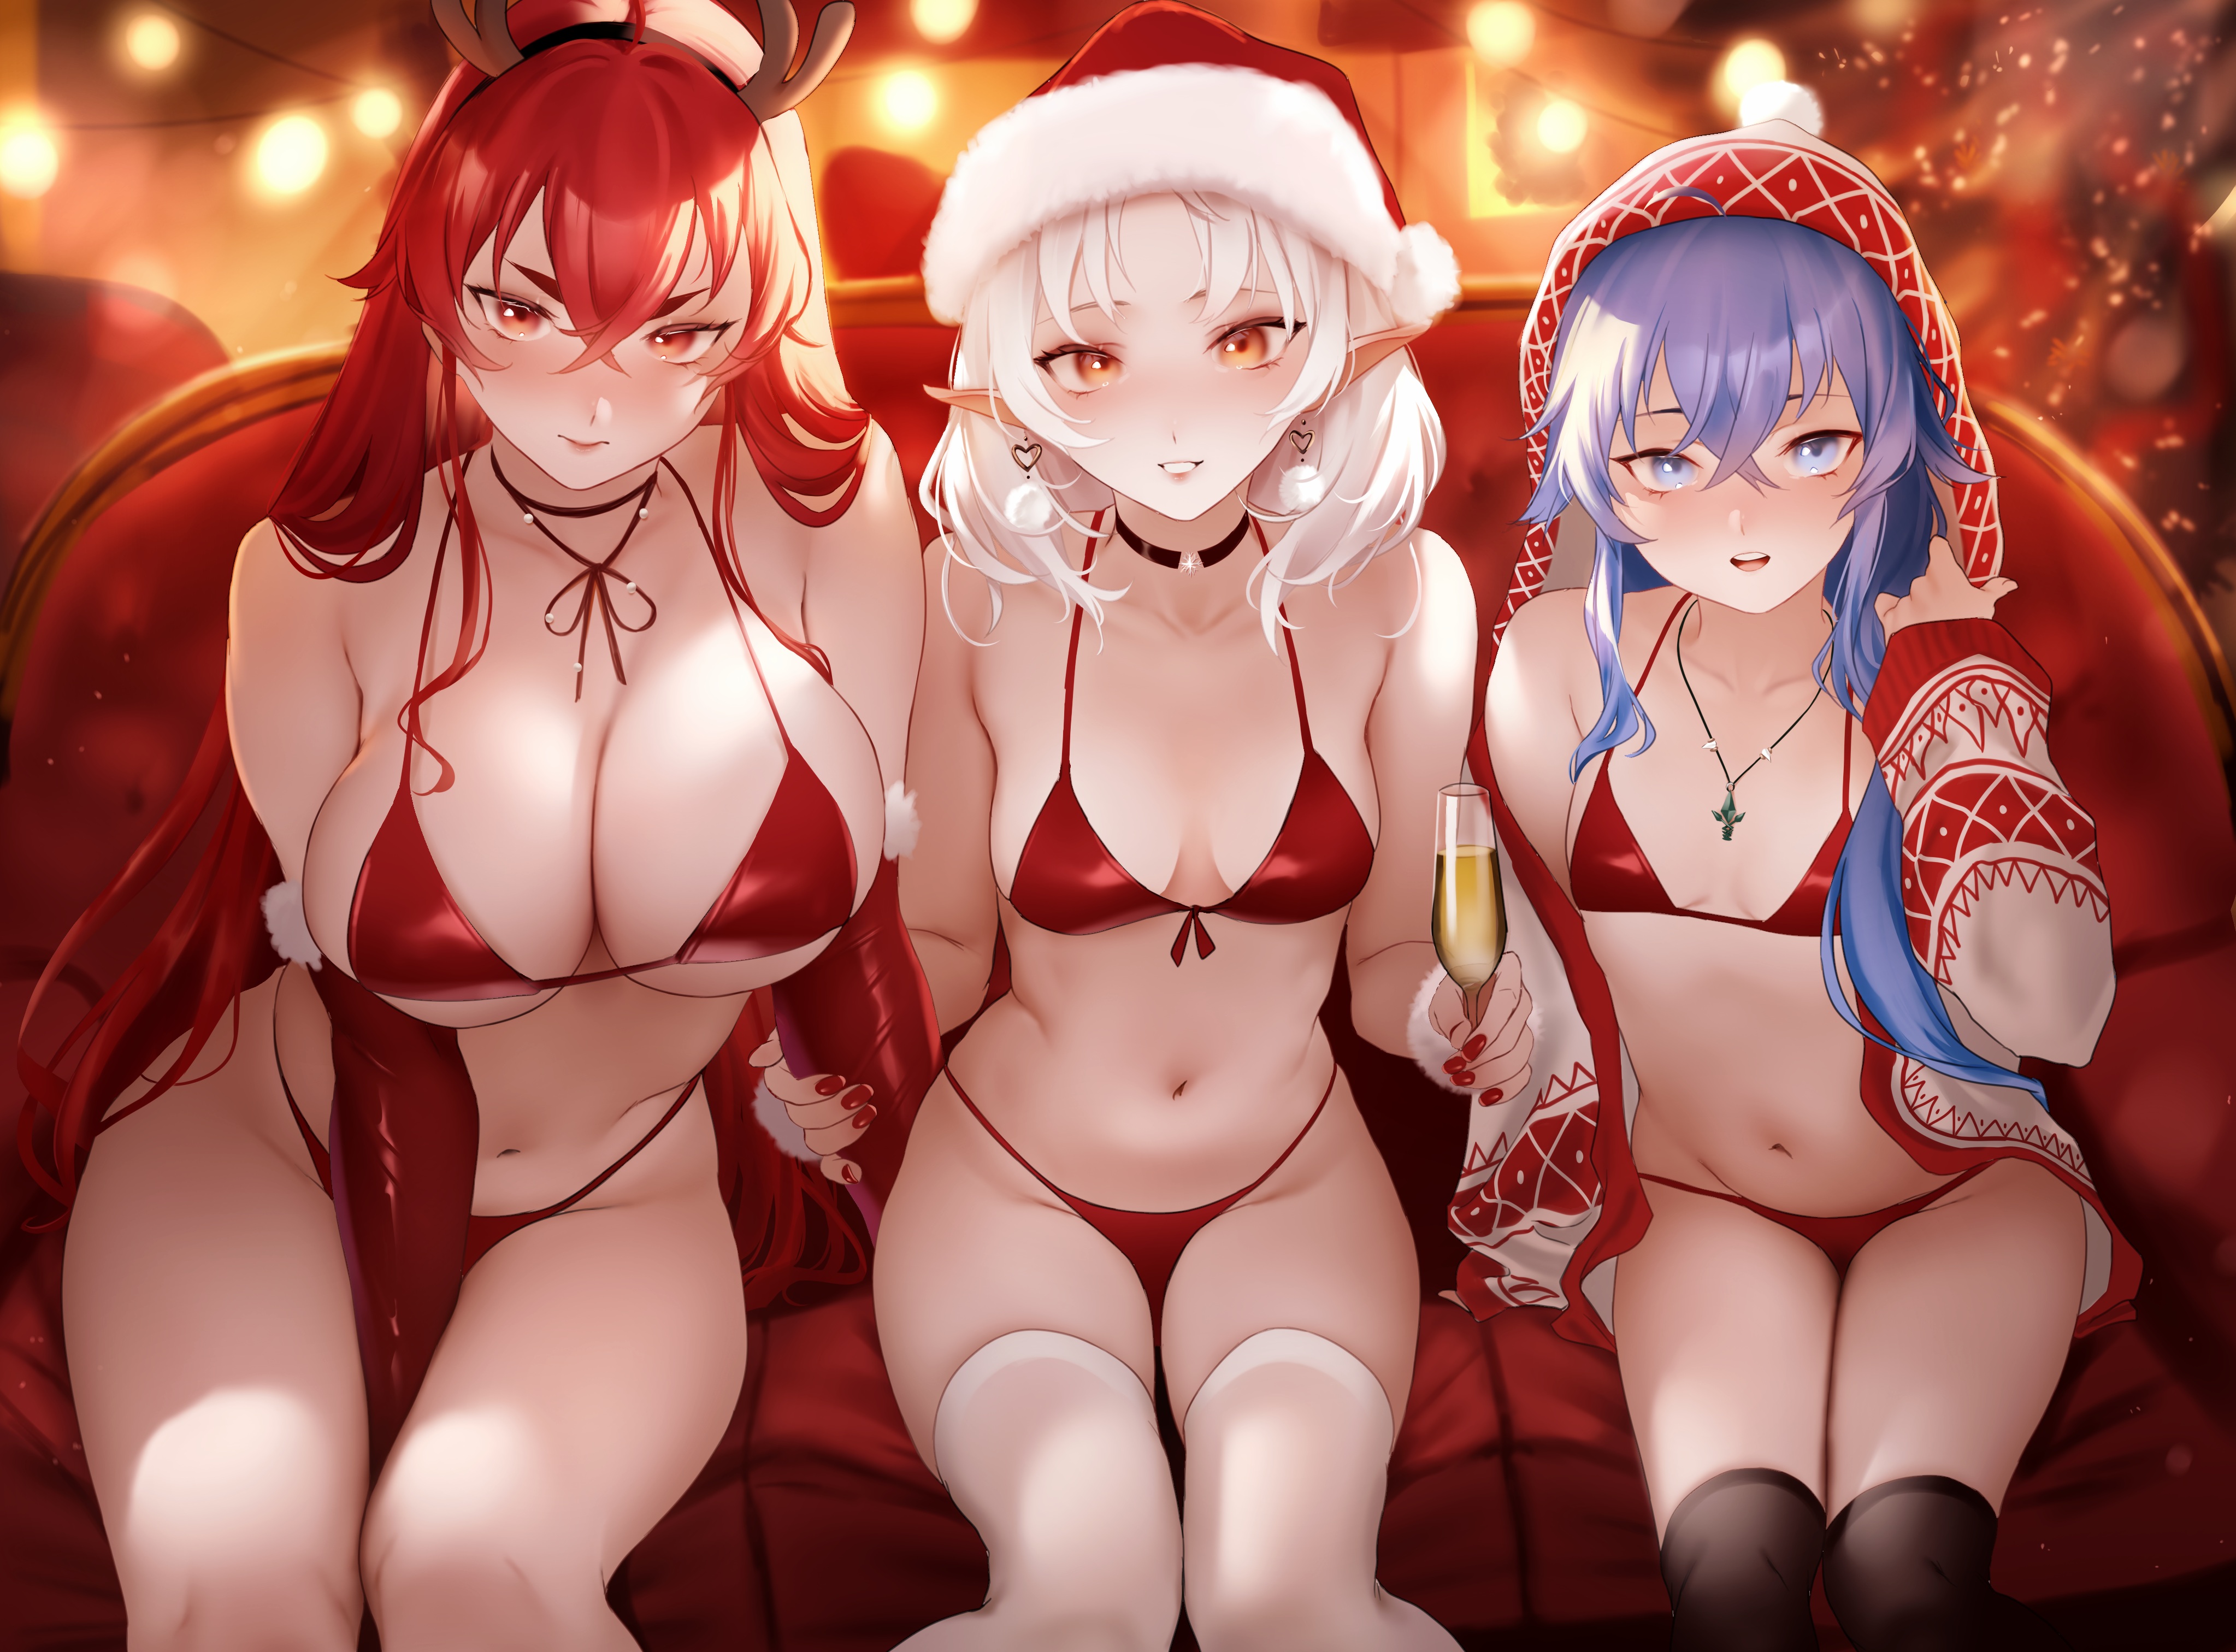 Anime 4093x3024 anime anime girls Christmas cleavage Christmas clothes big boobs necklace stockings choker Santa hats antlers small boobs women trio Mushoku Tensei Eris Boreas Greyrat (Mushoku Tensei) Roxy Migurdia (Mushoku Tensei) Sylphiette